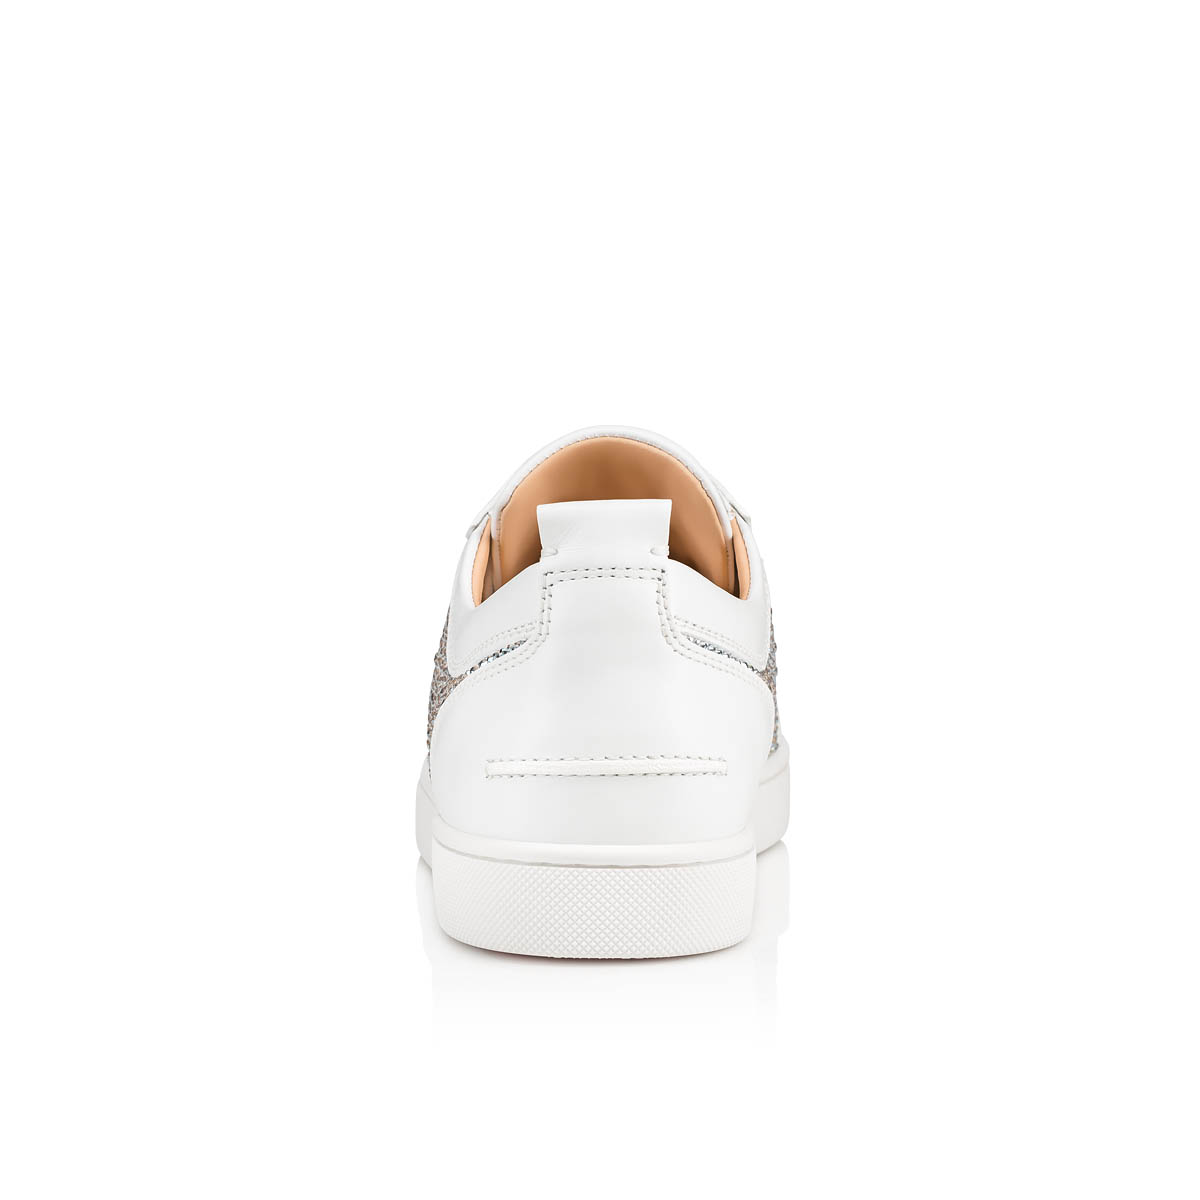 Christian Louboutin Louis Junior Strass White - Mens Shoes - Size 42